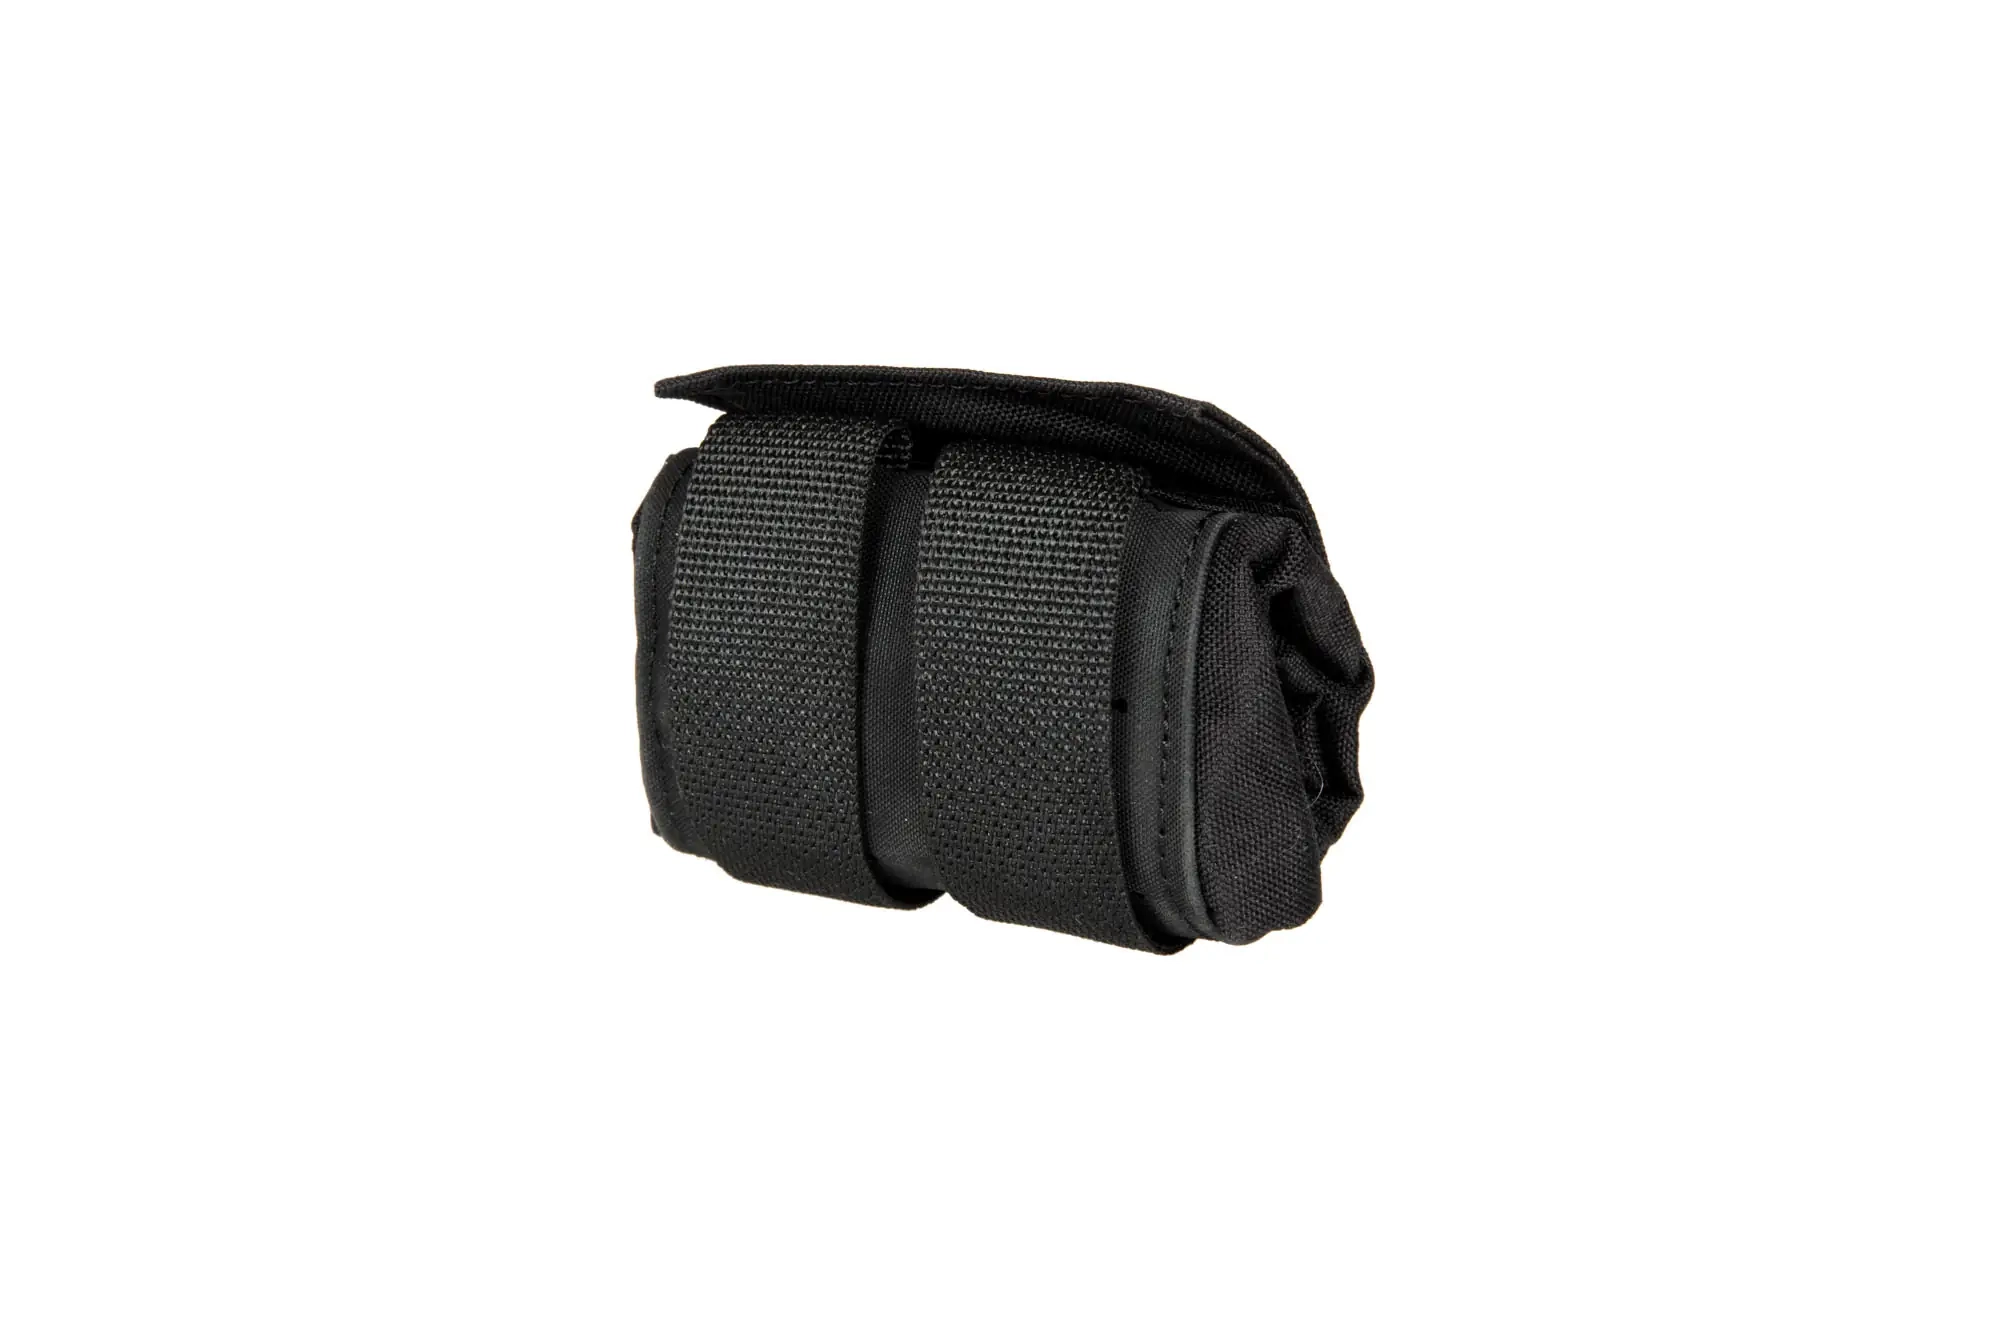 MINI Foldable Magdump pouch - Black